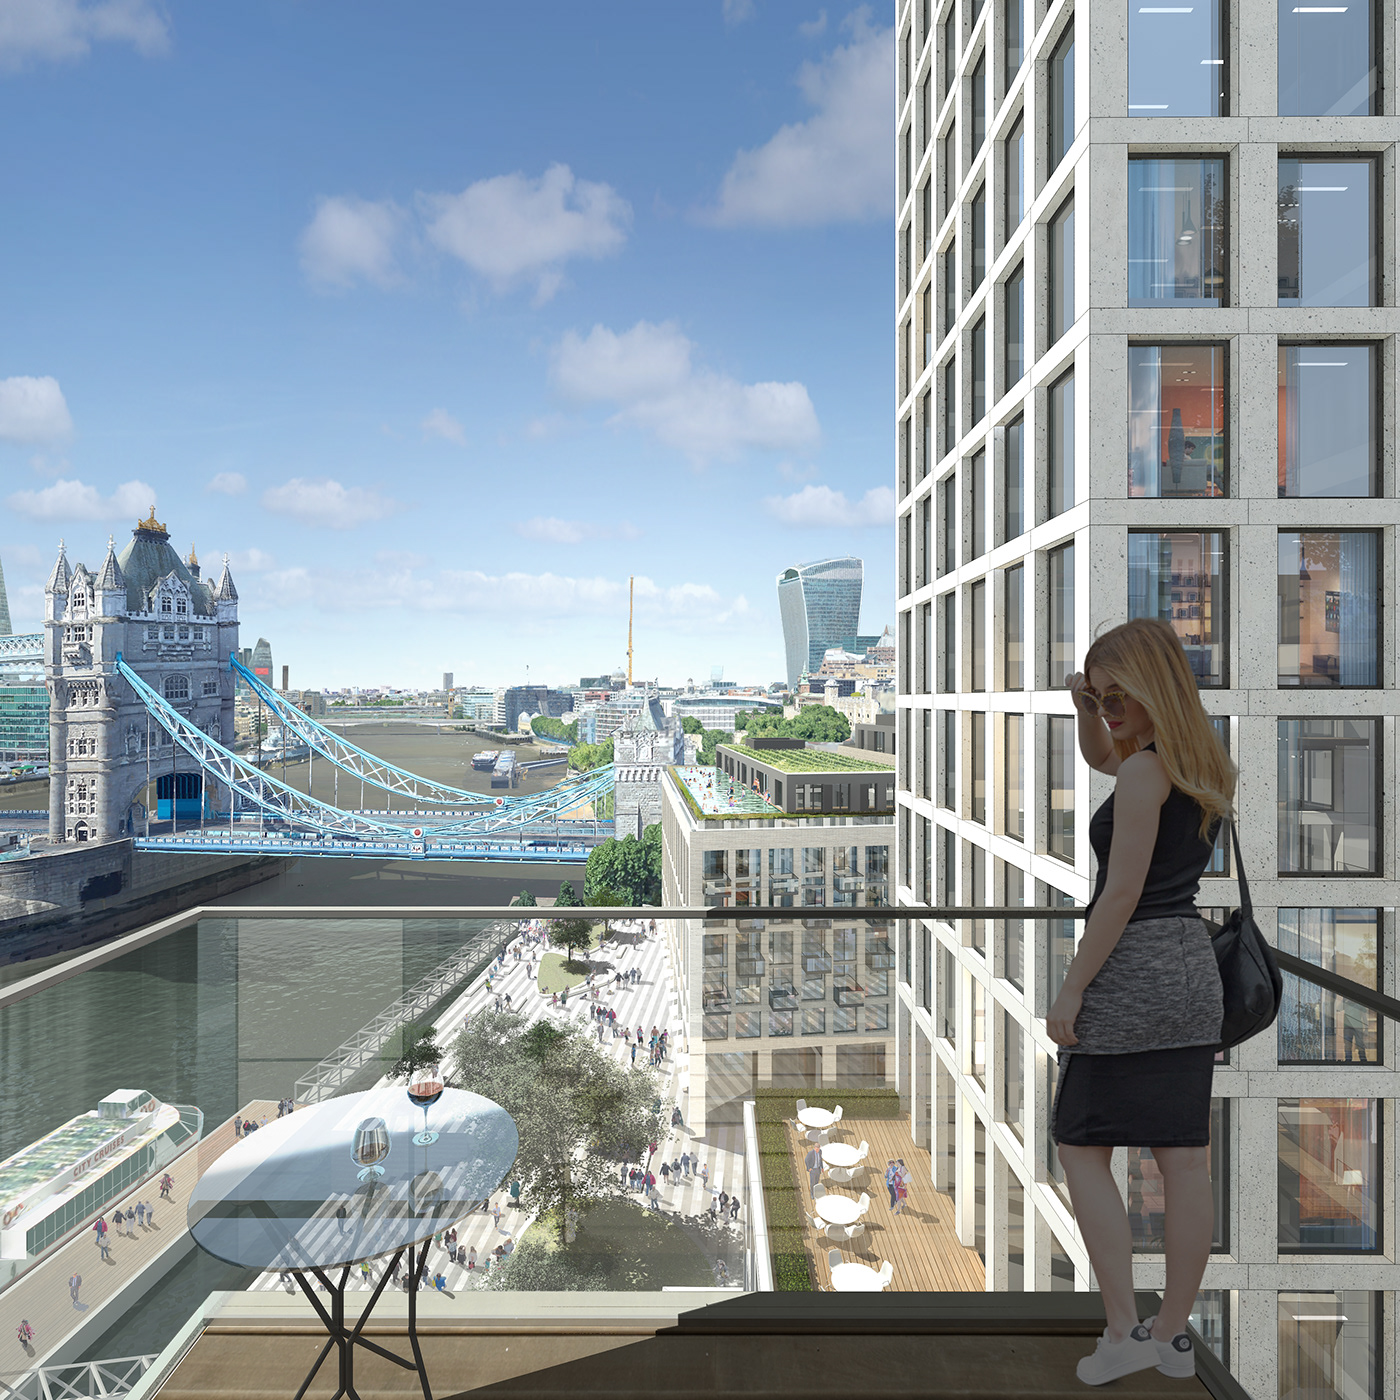 London Tower Bridge Hotel project redevelopment study concept design Contemporary architecture imagination Historical Context